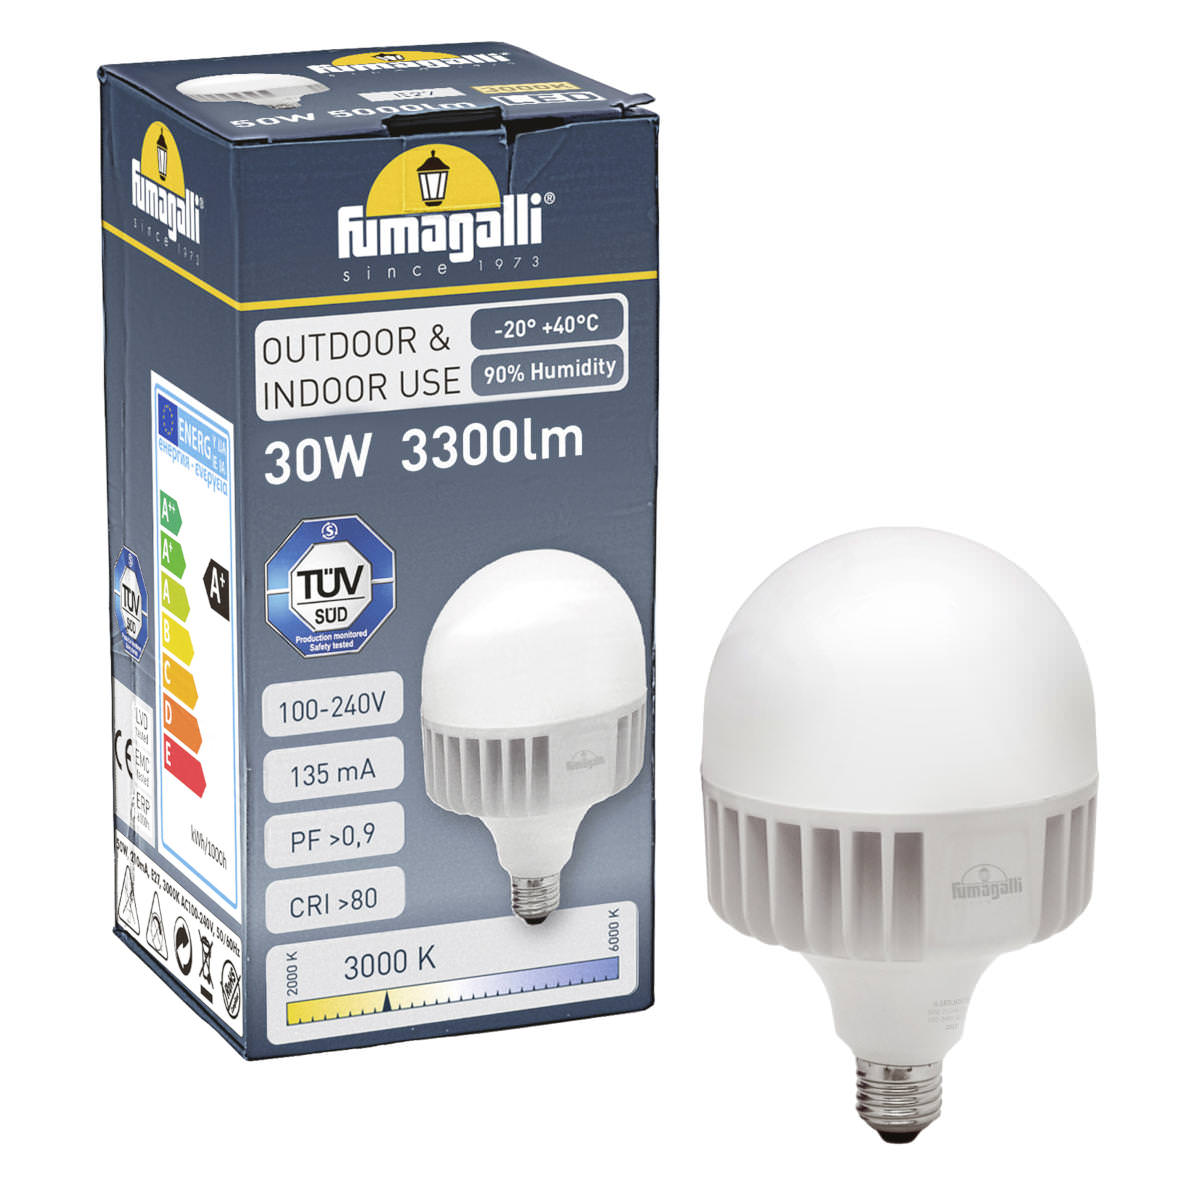 Fumagalli 30W E27 LED High Power Lamp 4000K 3300lm - Beacon Lights